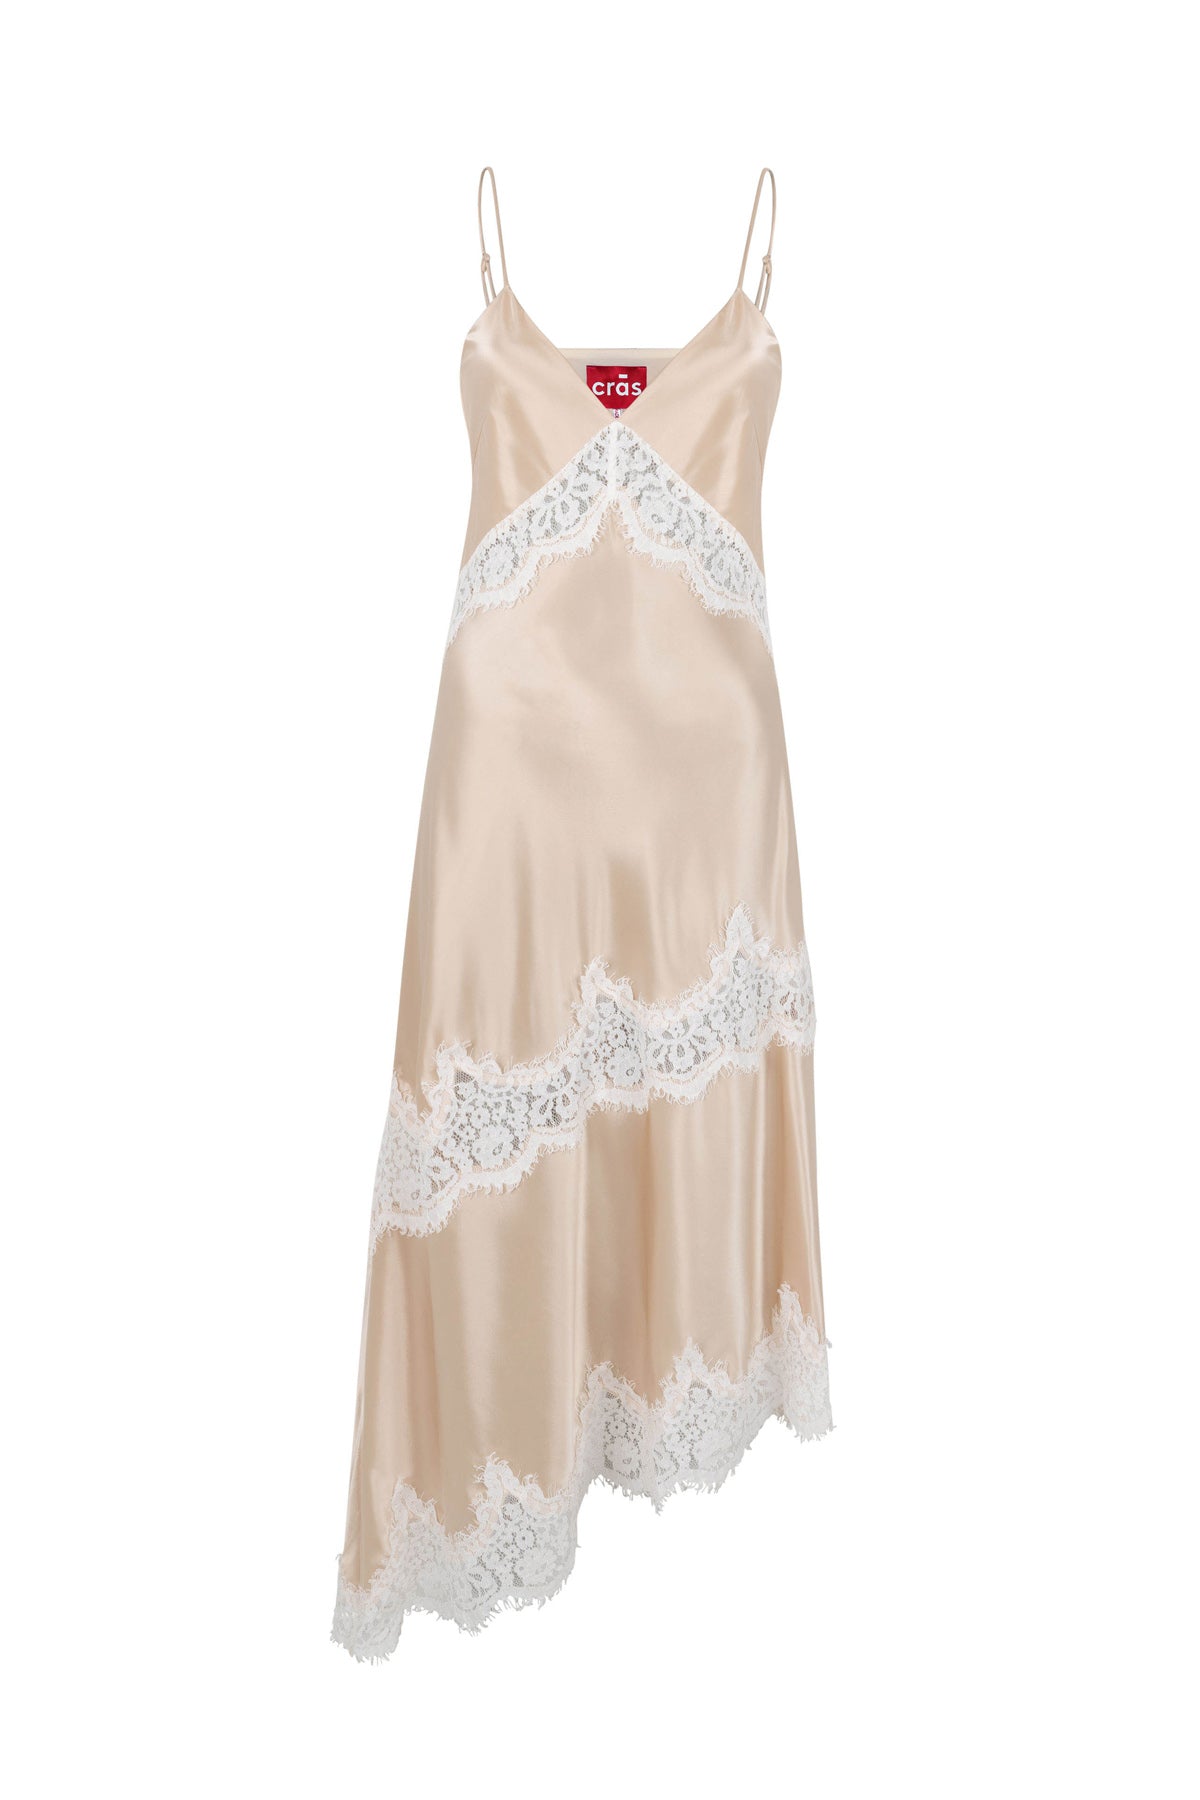 CRAS Julie Dress Dress 1003 Champagne White